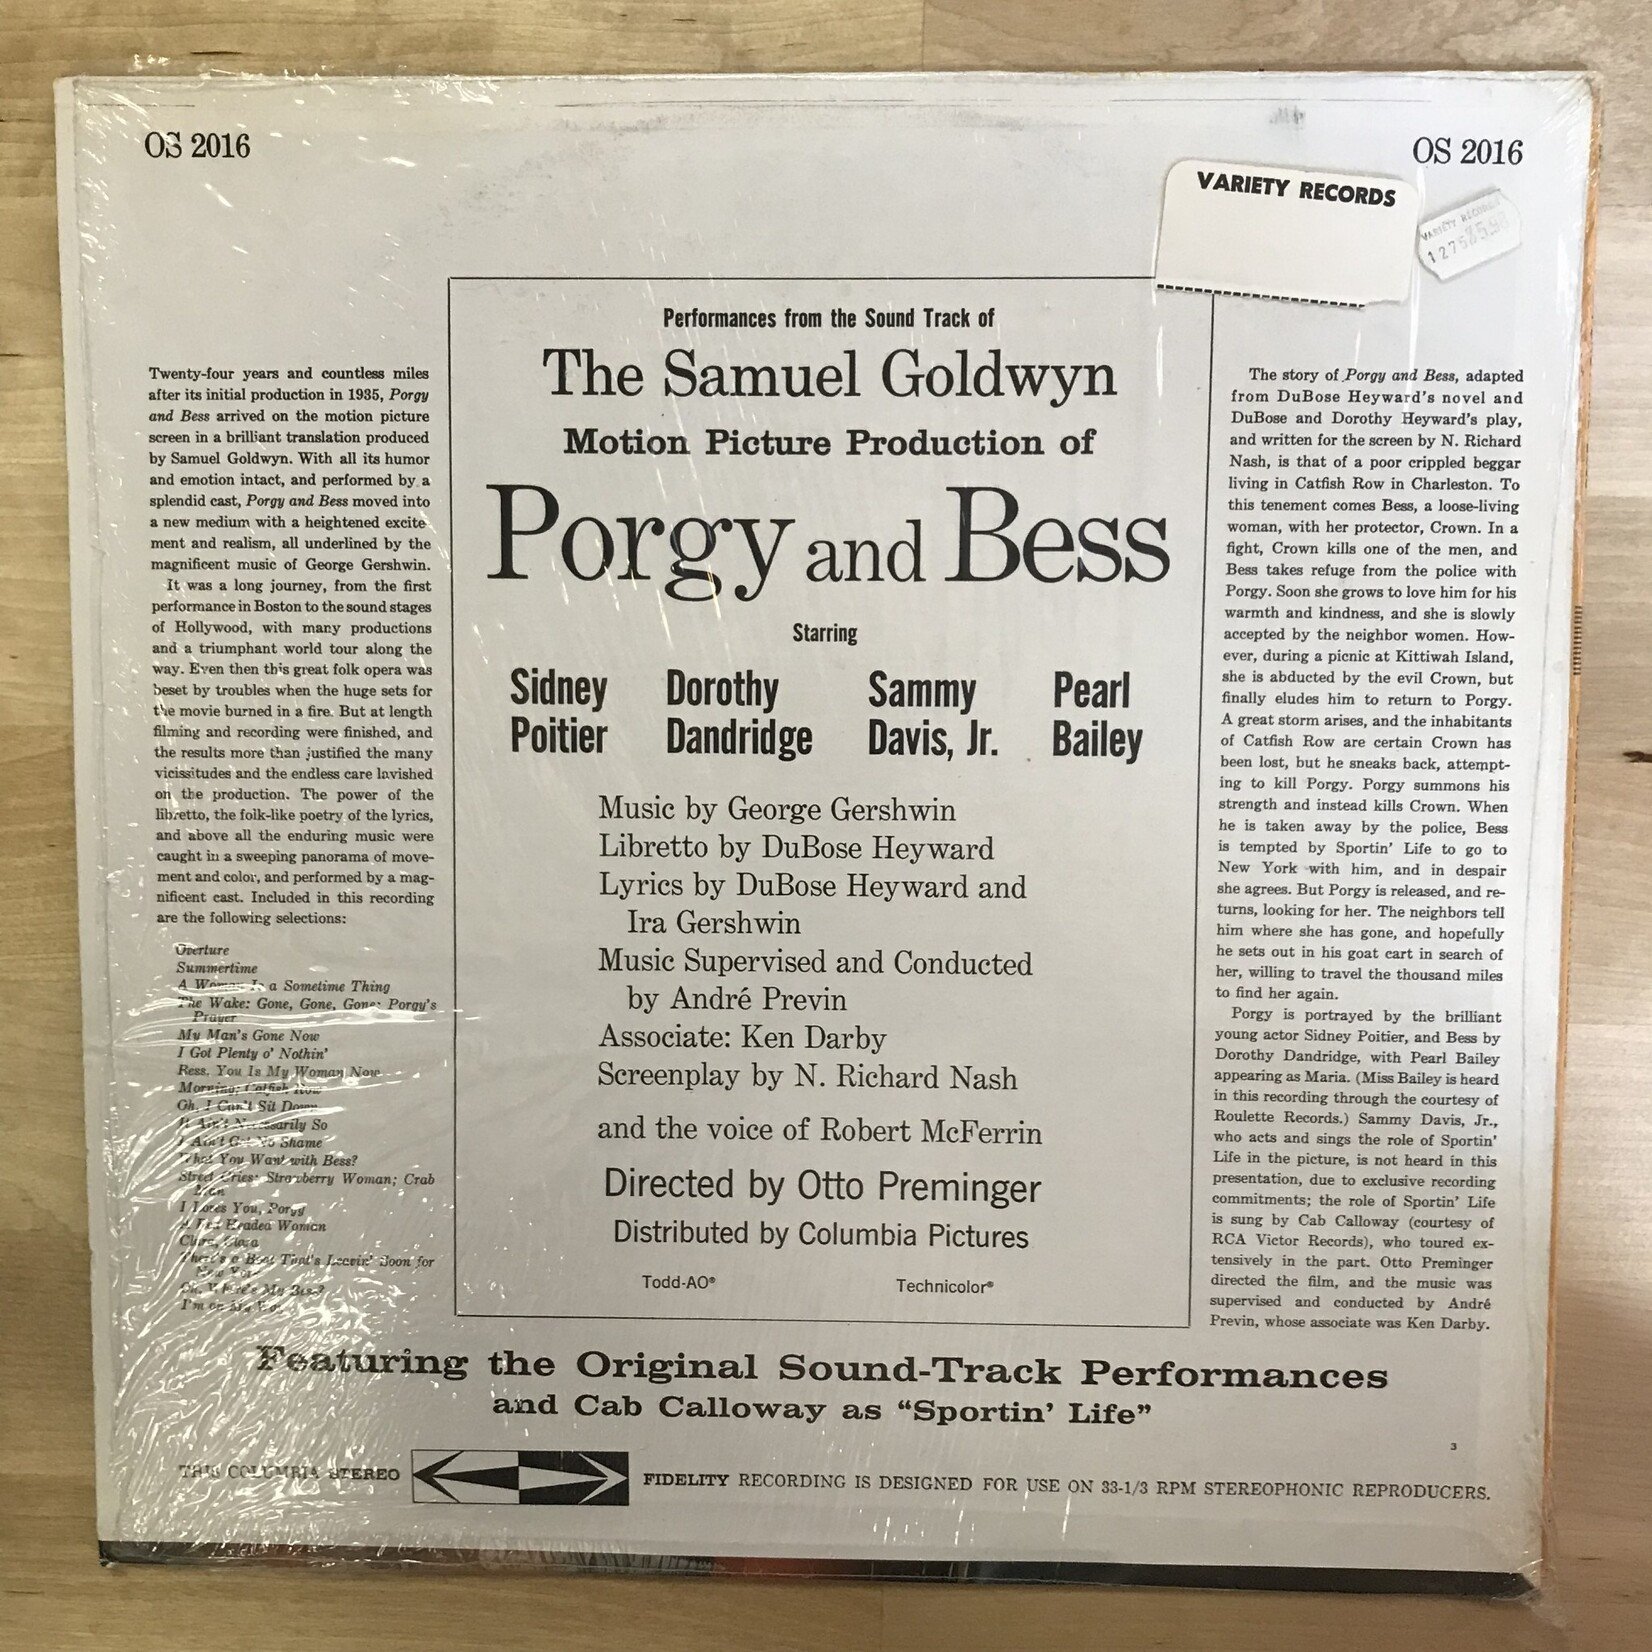 Porgy And Bess - Original Sound Track Recording (CBS Masterworks) - XSM45953 - Vinyl LP (USED)